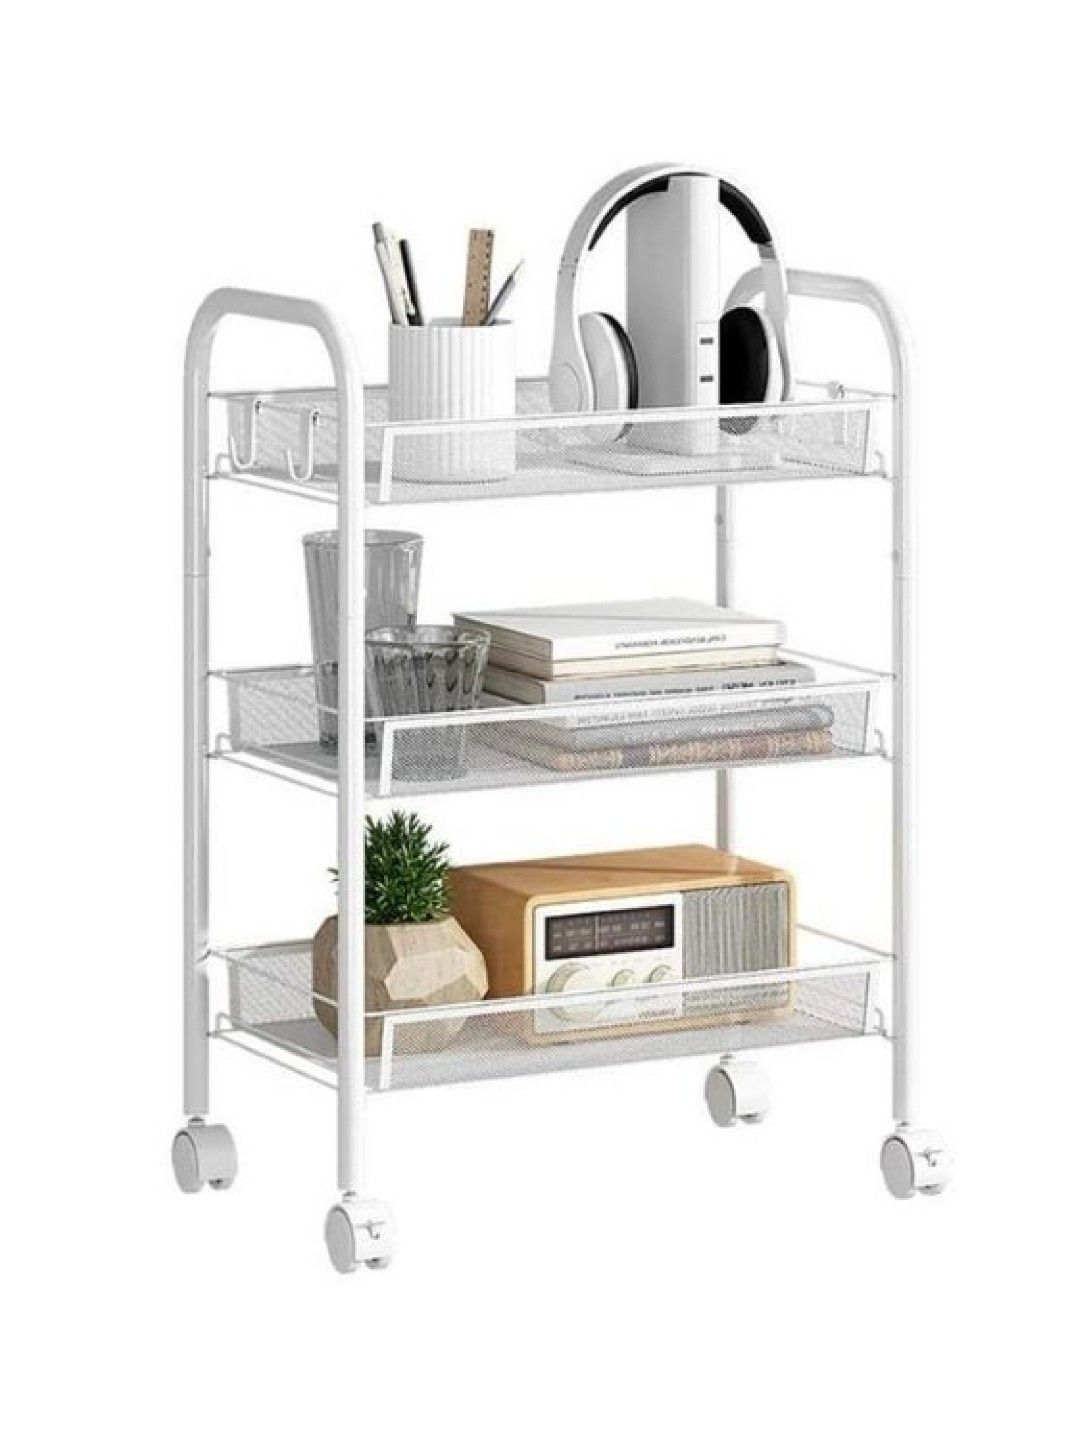 Sunbeams Lifestyle Nest Design Lab Multi-Tier Narrow Kitchen Storage Trolley Cart